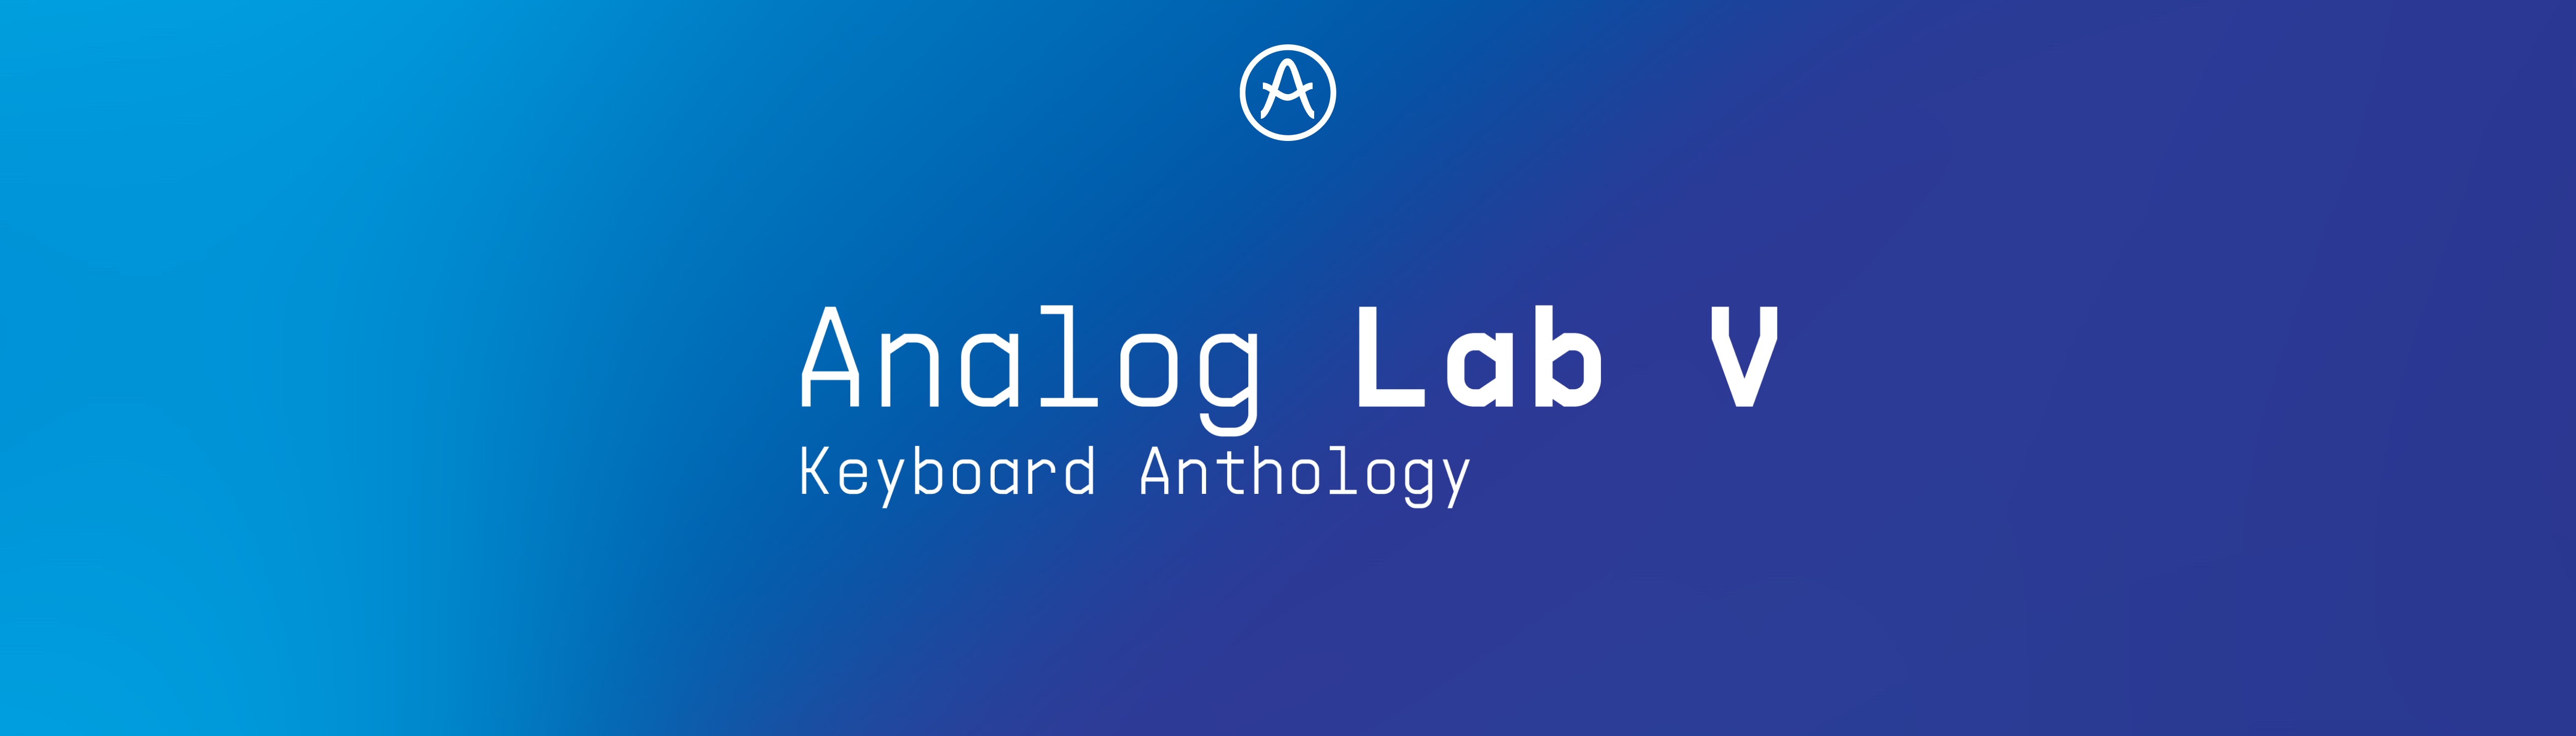 download the last version for mac Arturia Analog lab V